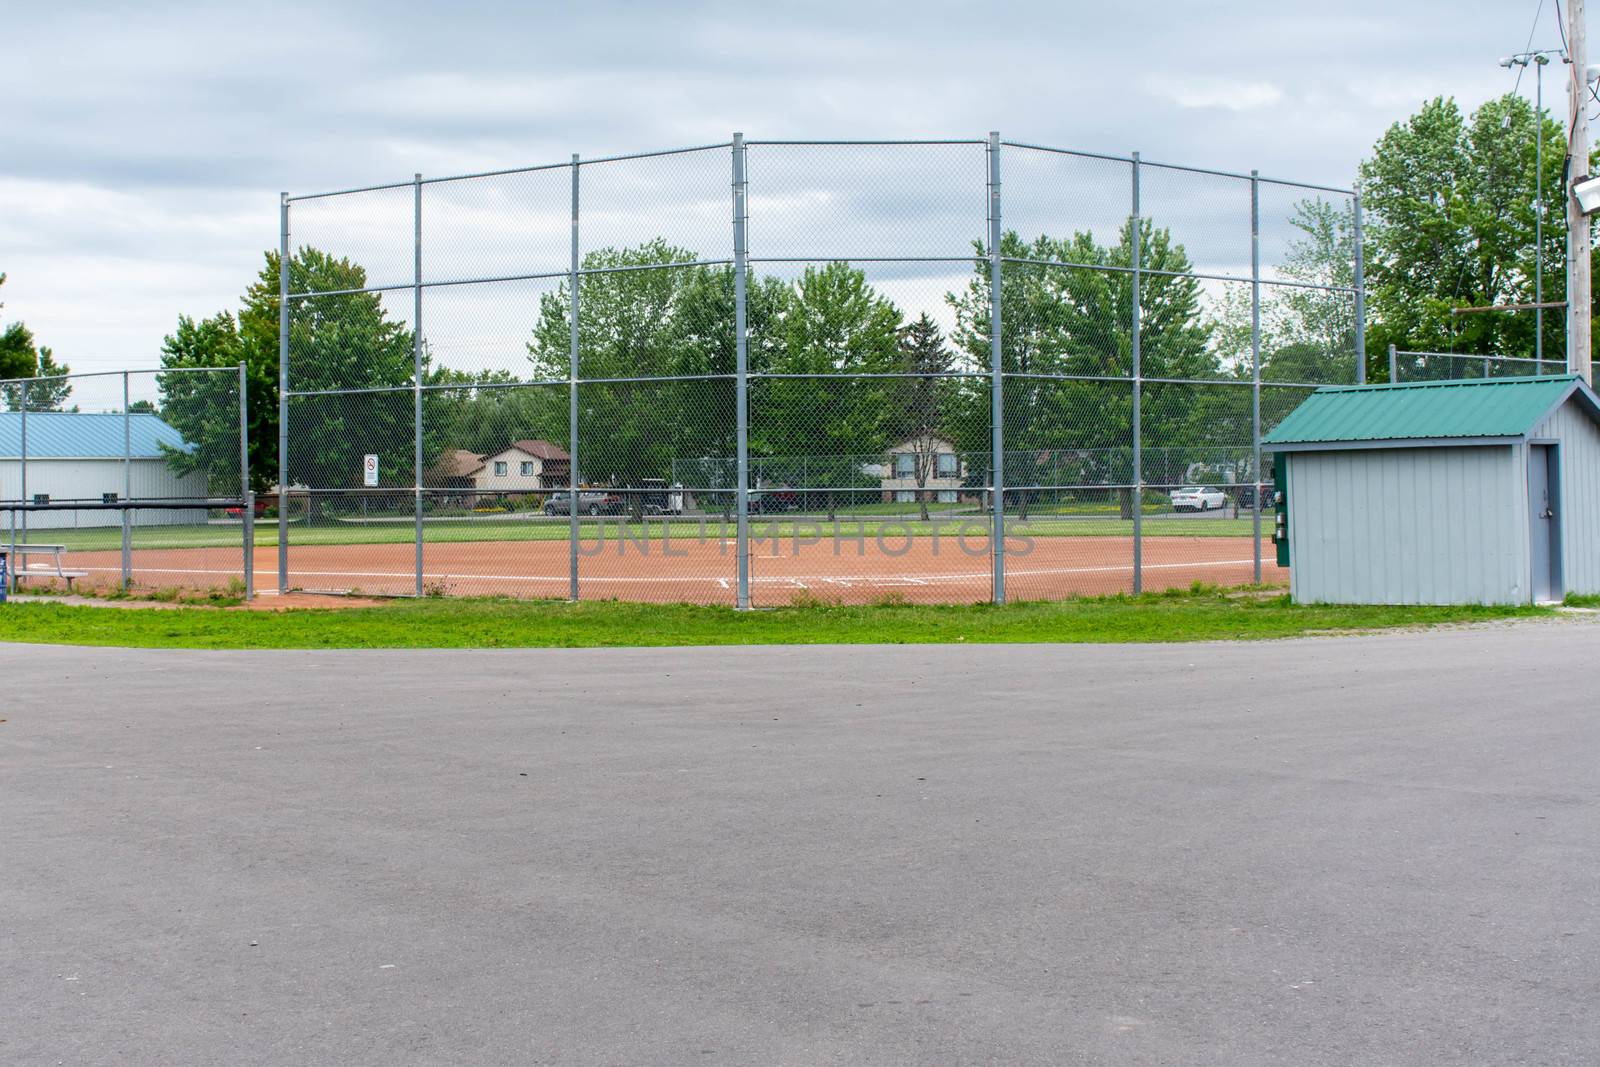 Baseball or softball diamond through a fence in  park in a small by kingmaphotos